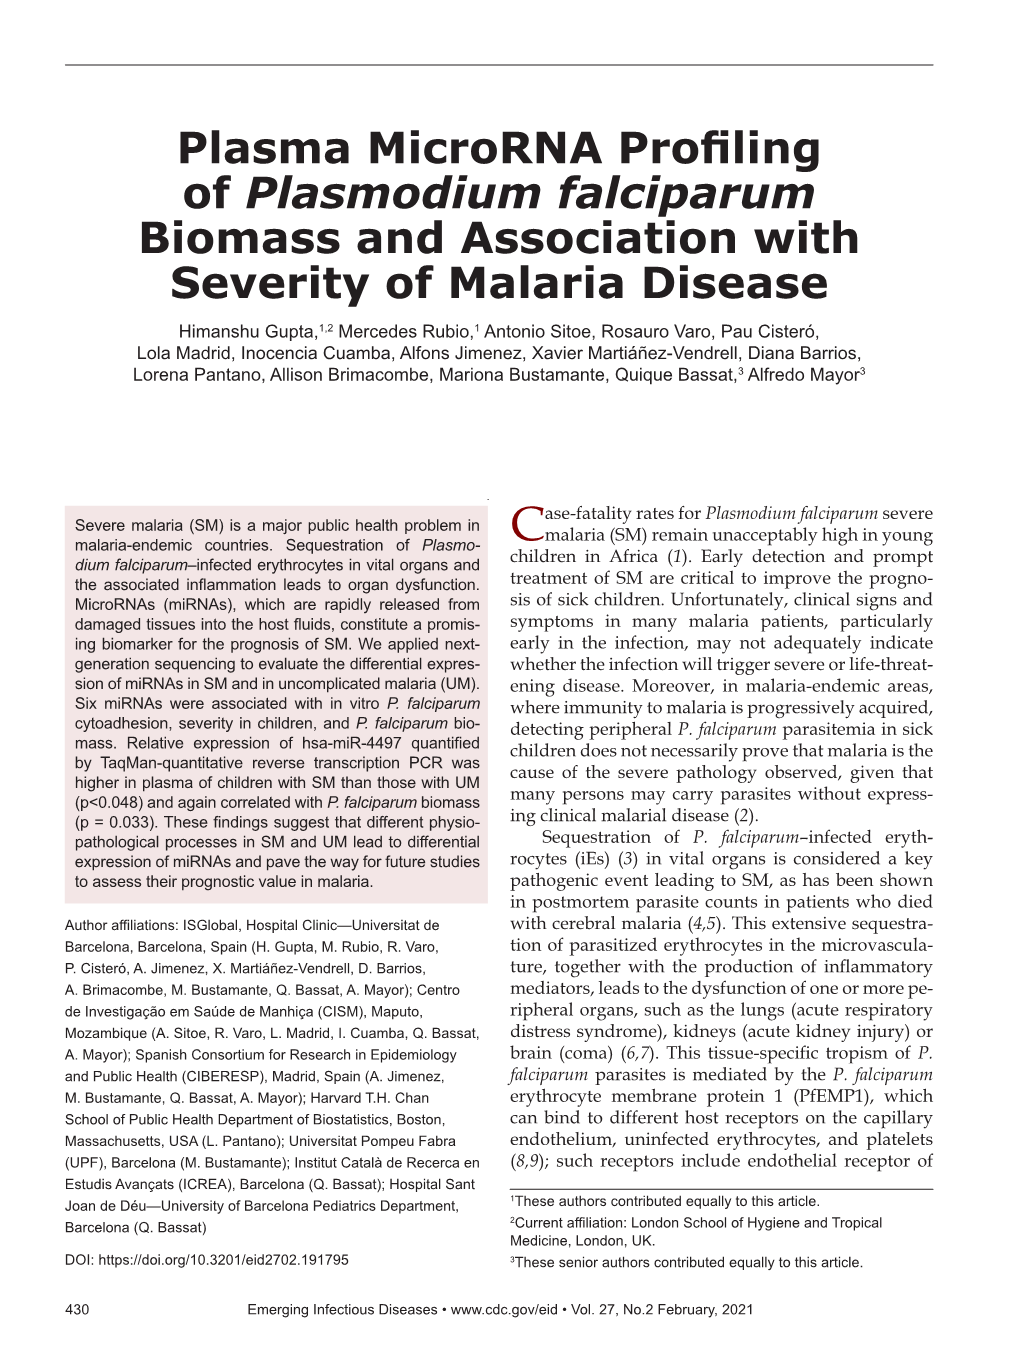 Plasma Microrna Profiling of Plasmodium Falciparum Biomass